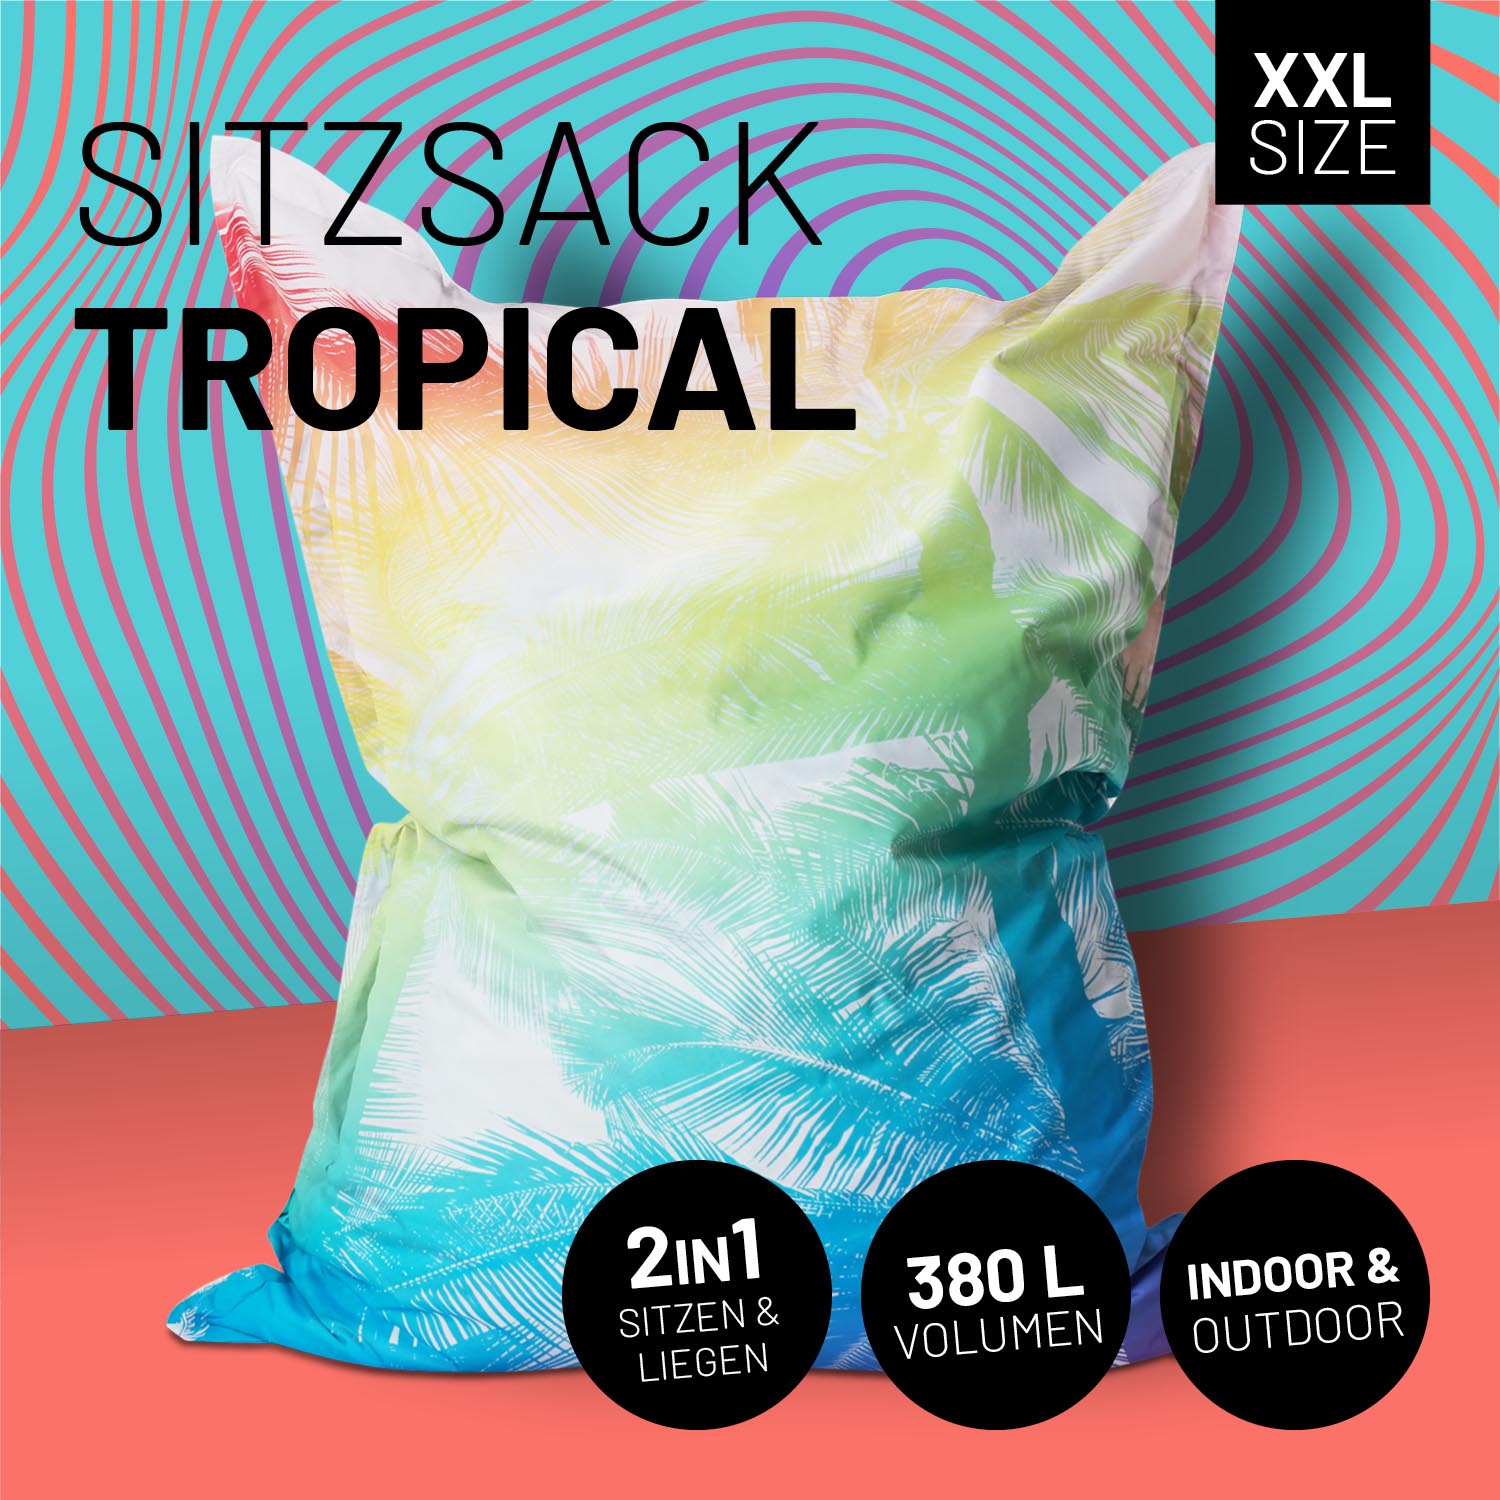 Sitzsack Classic XXL (380 L) - In- & outdoor - Special Edition Tropical Regenbogen